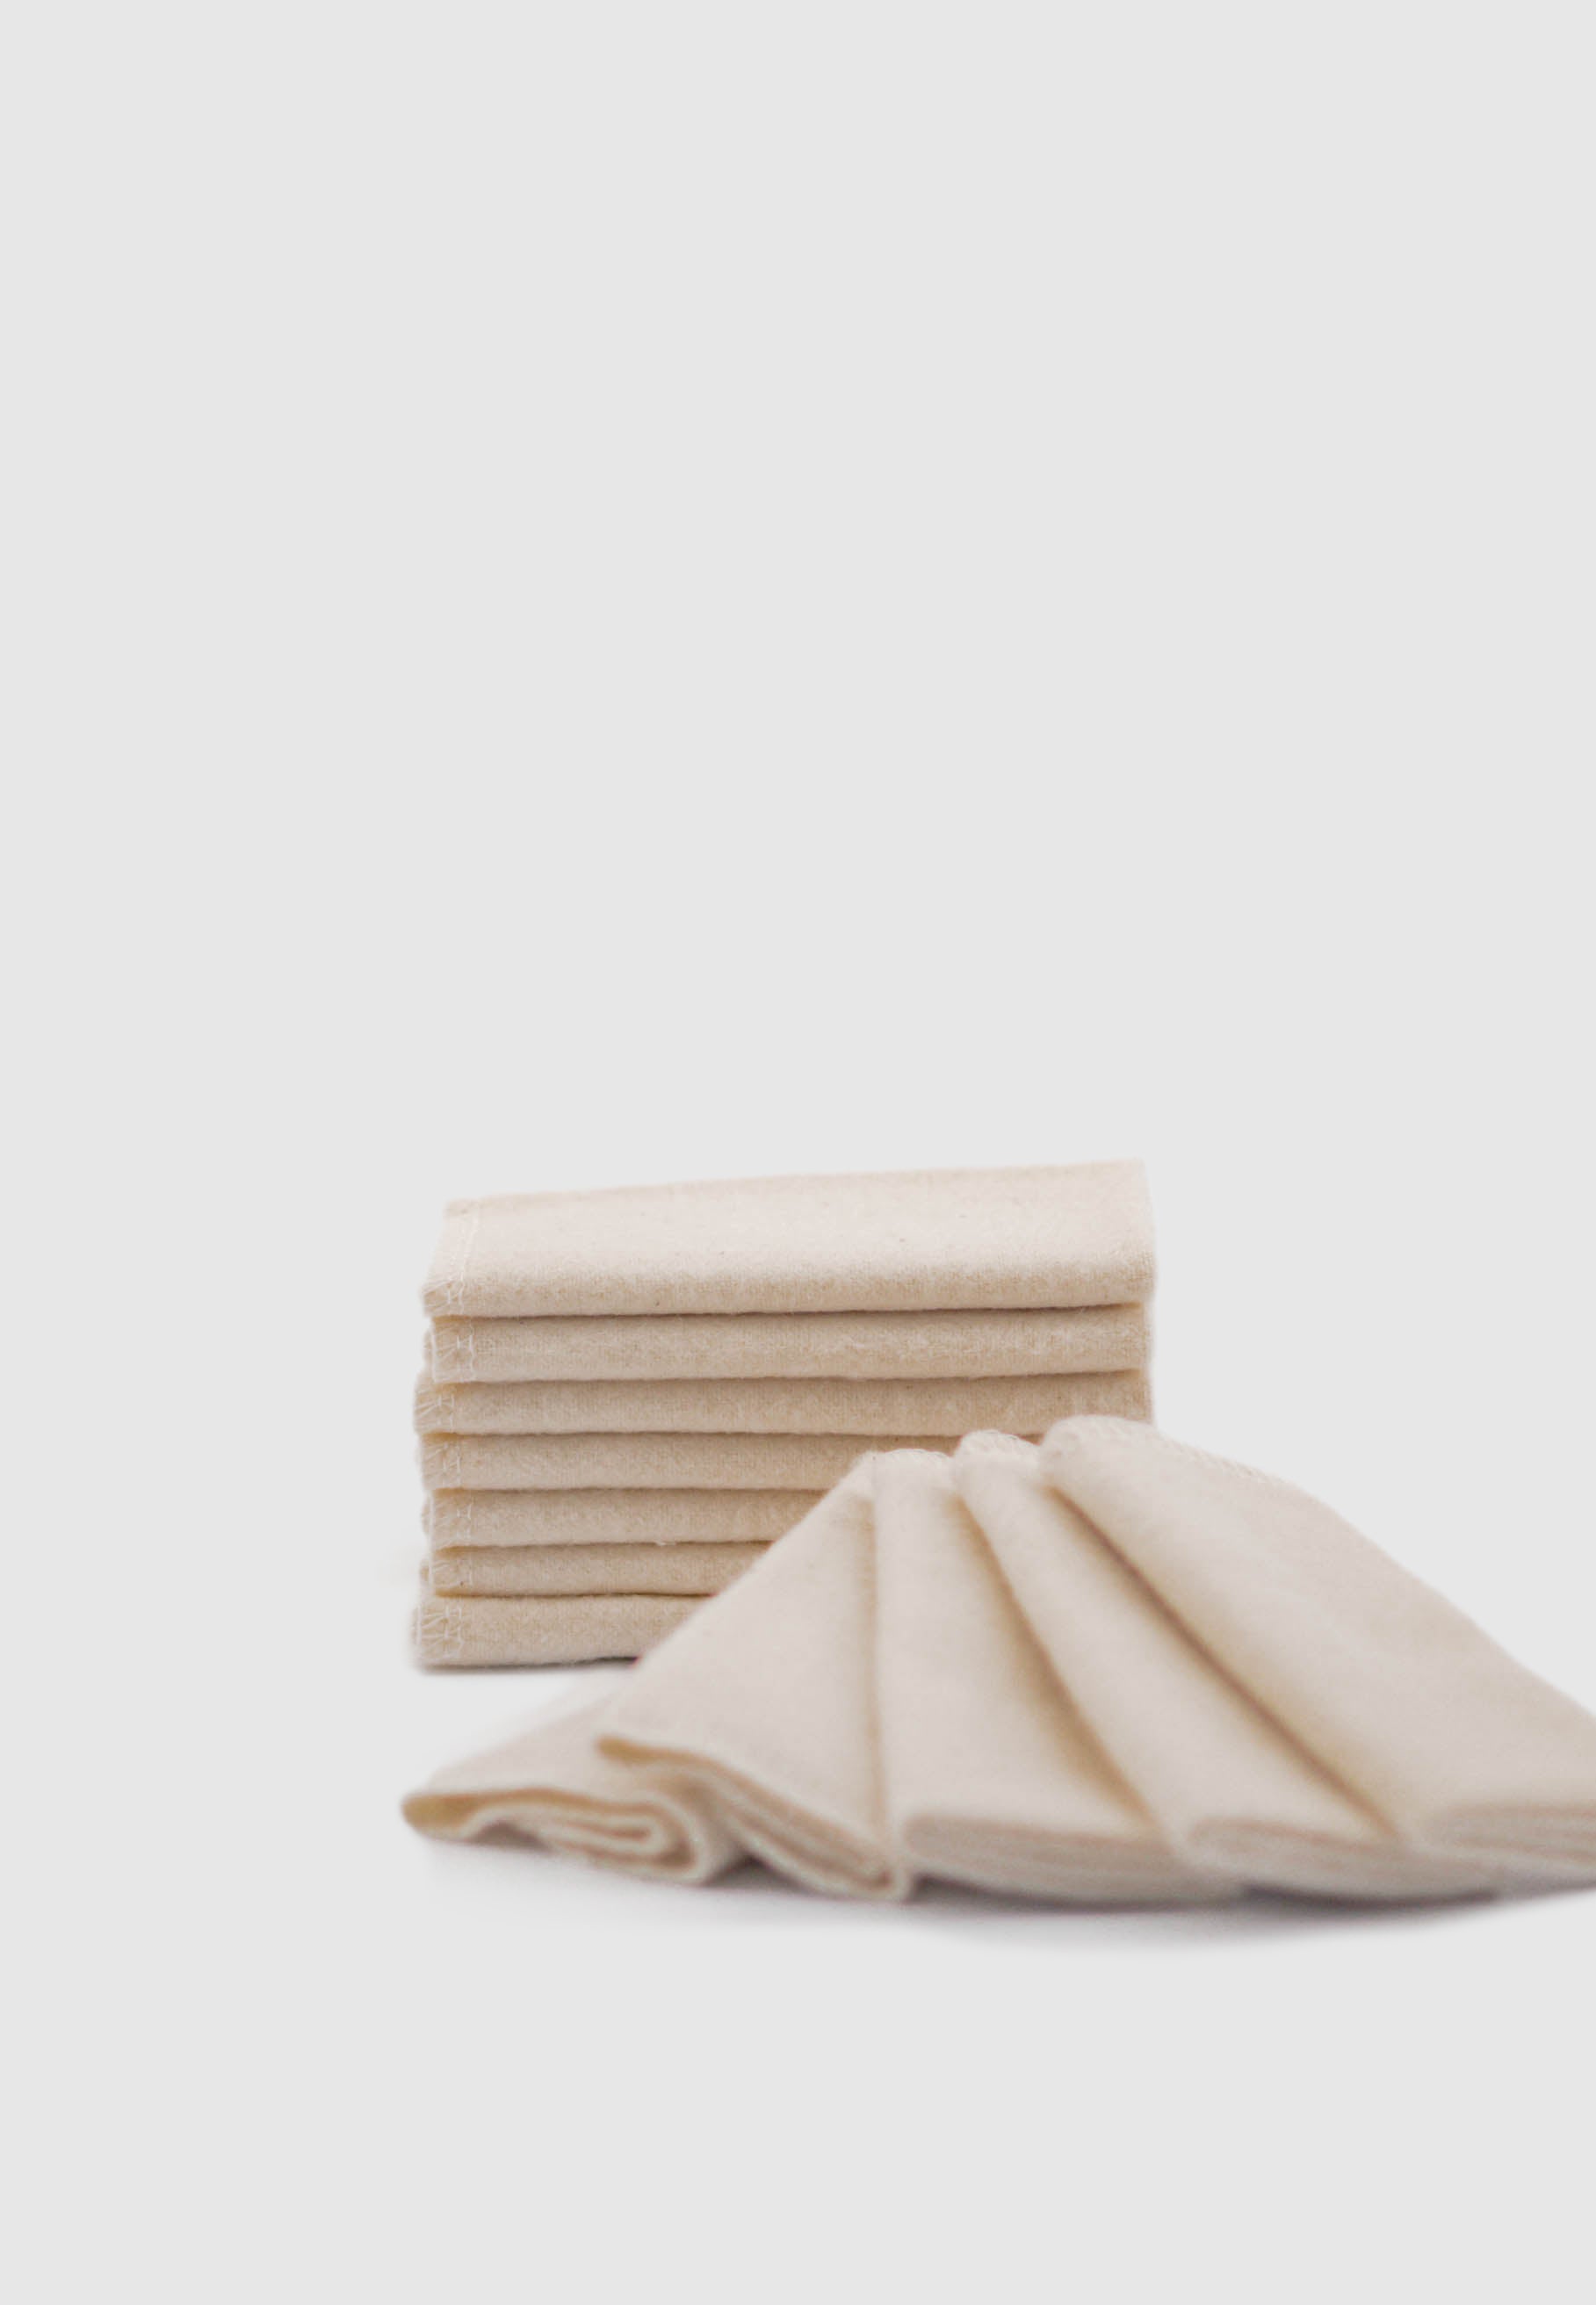 Handmade Organic Cotton All-Purpose Cloths Set of 12 | Shop at KonMari